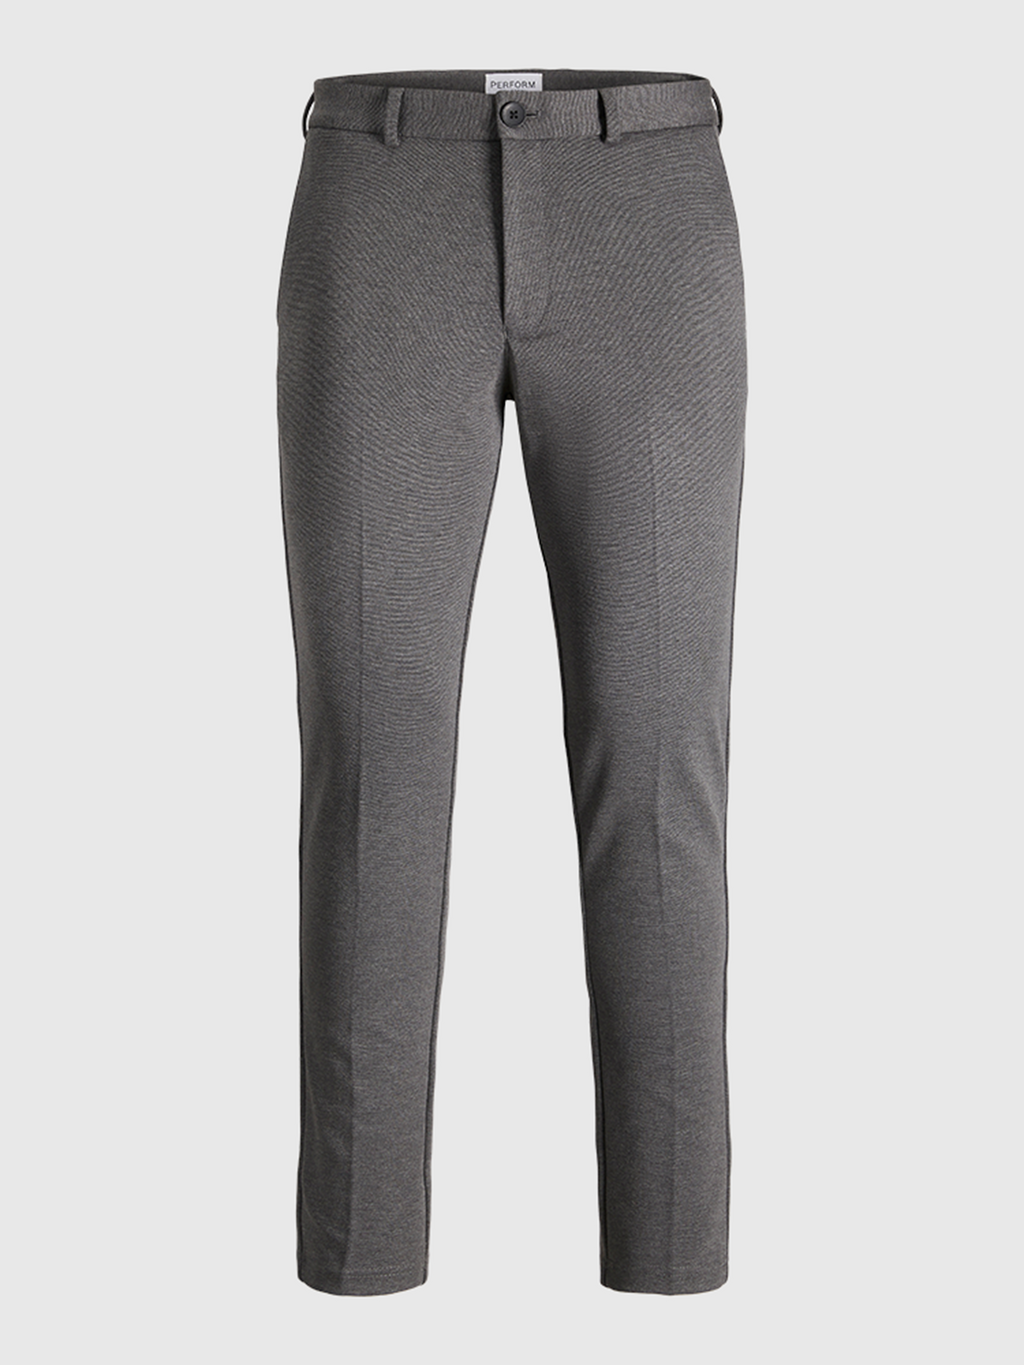 Performance Trousers (Regular) - Dark Grey